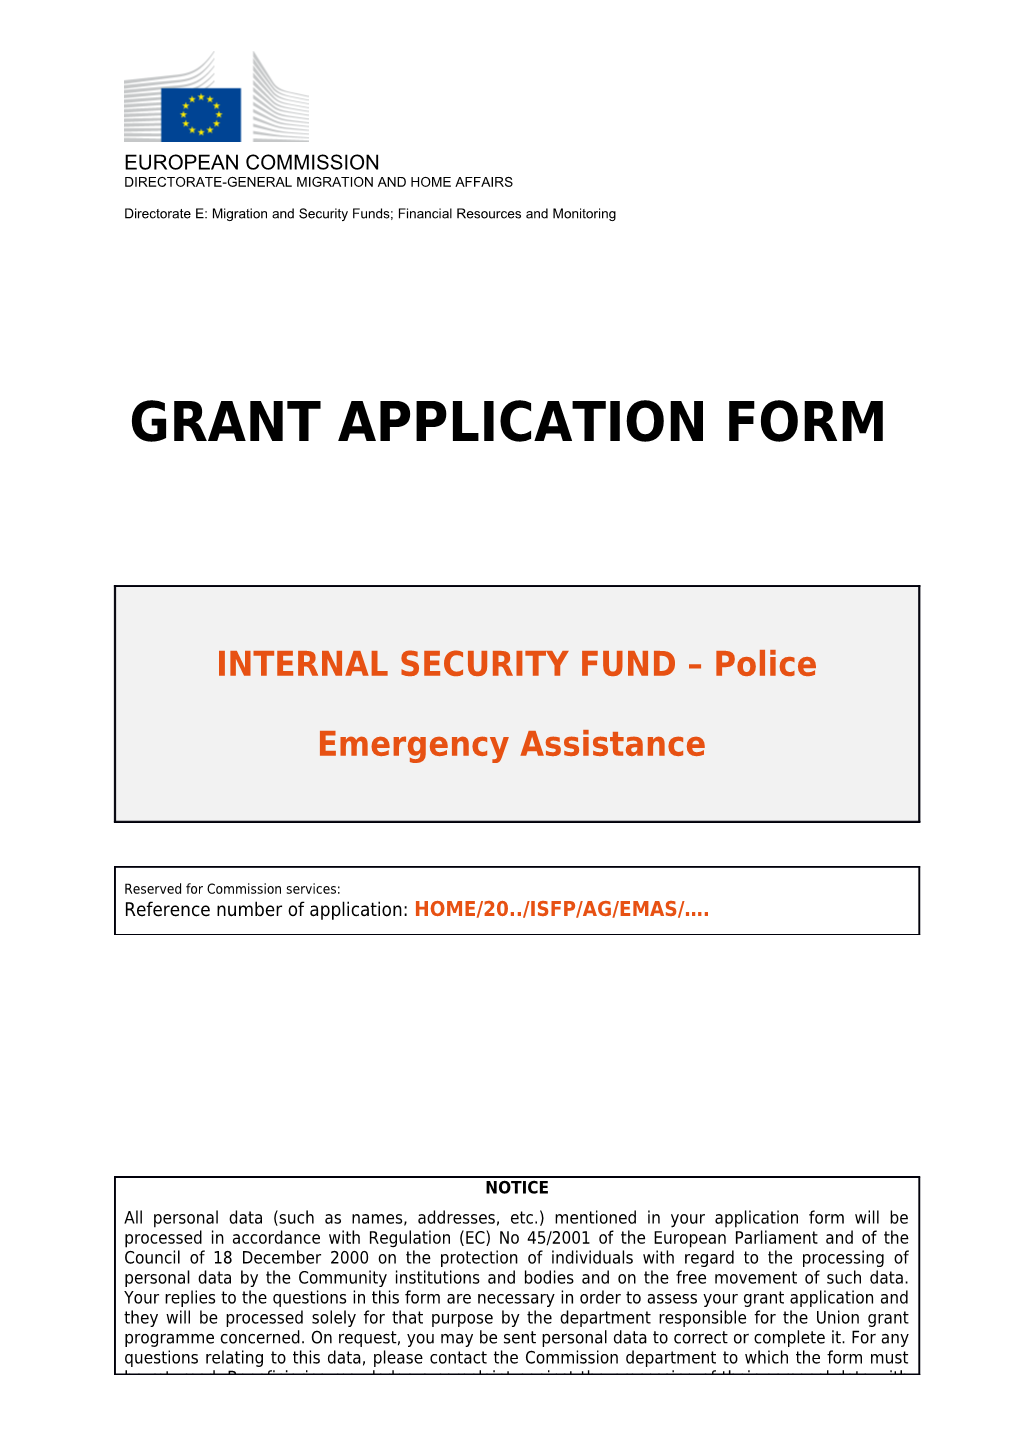 ISFP Application Form